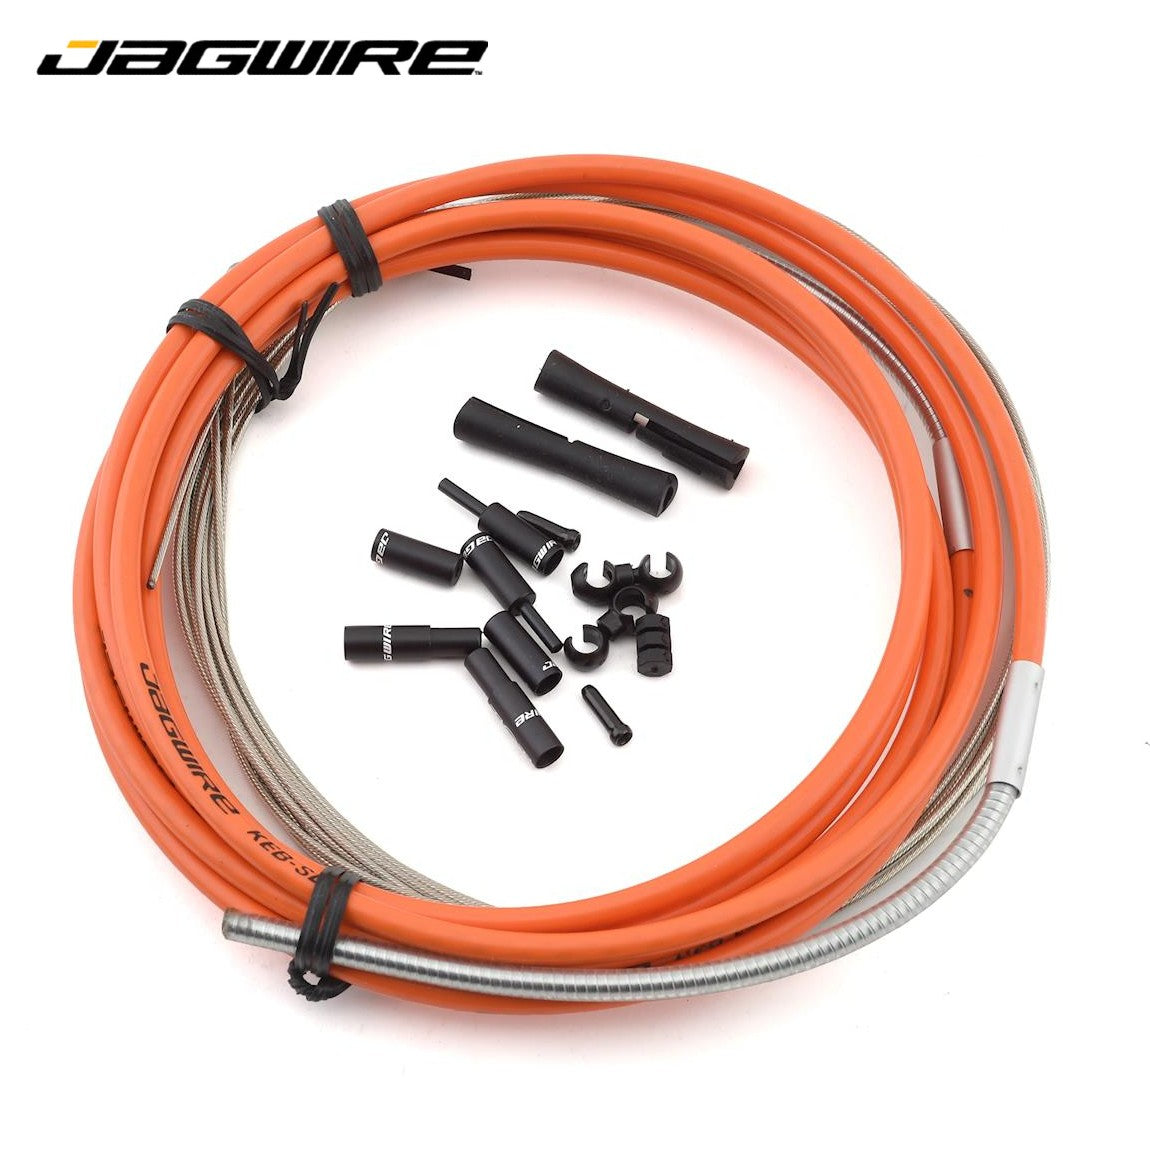 Jagwire Road Pro Brake Cable Kit - Orange